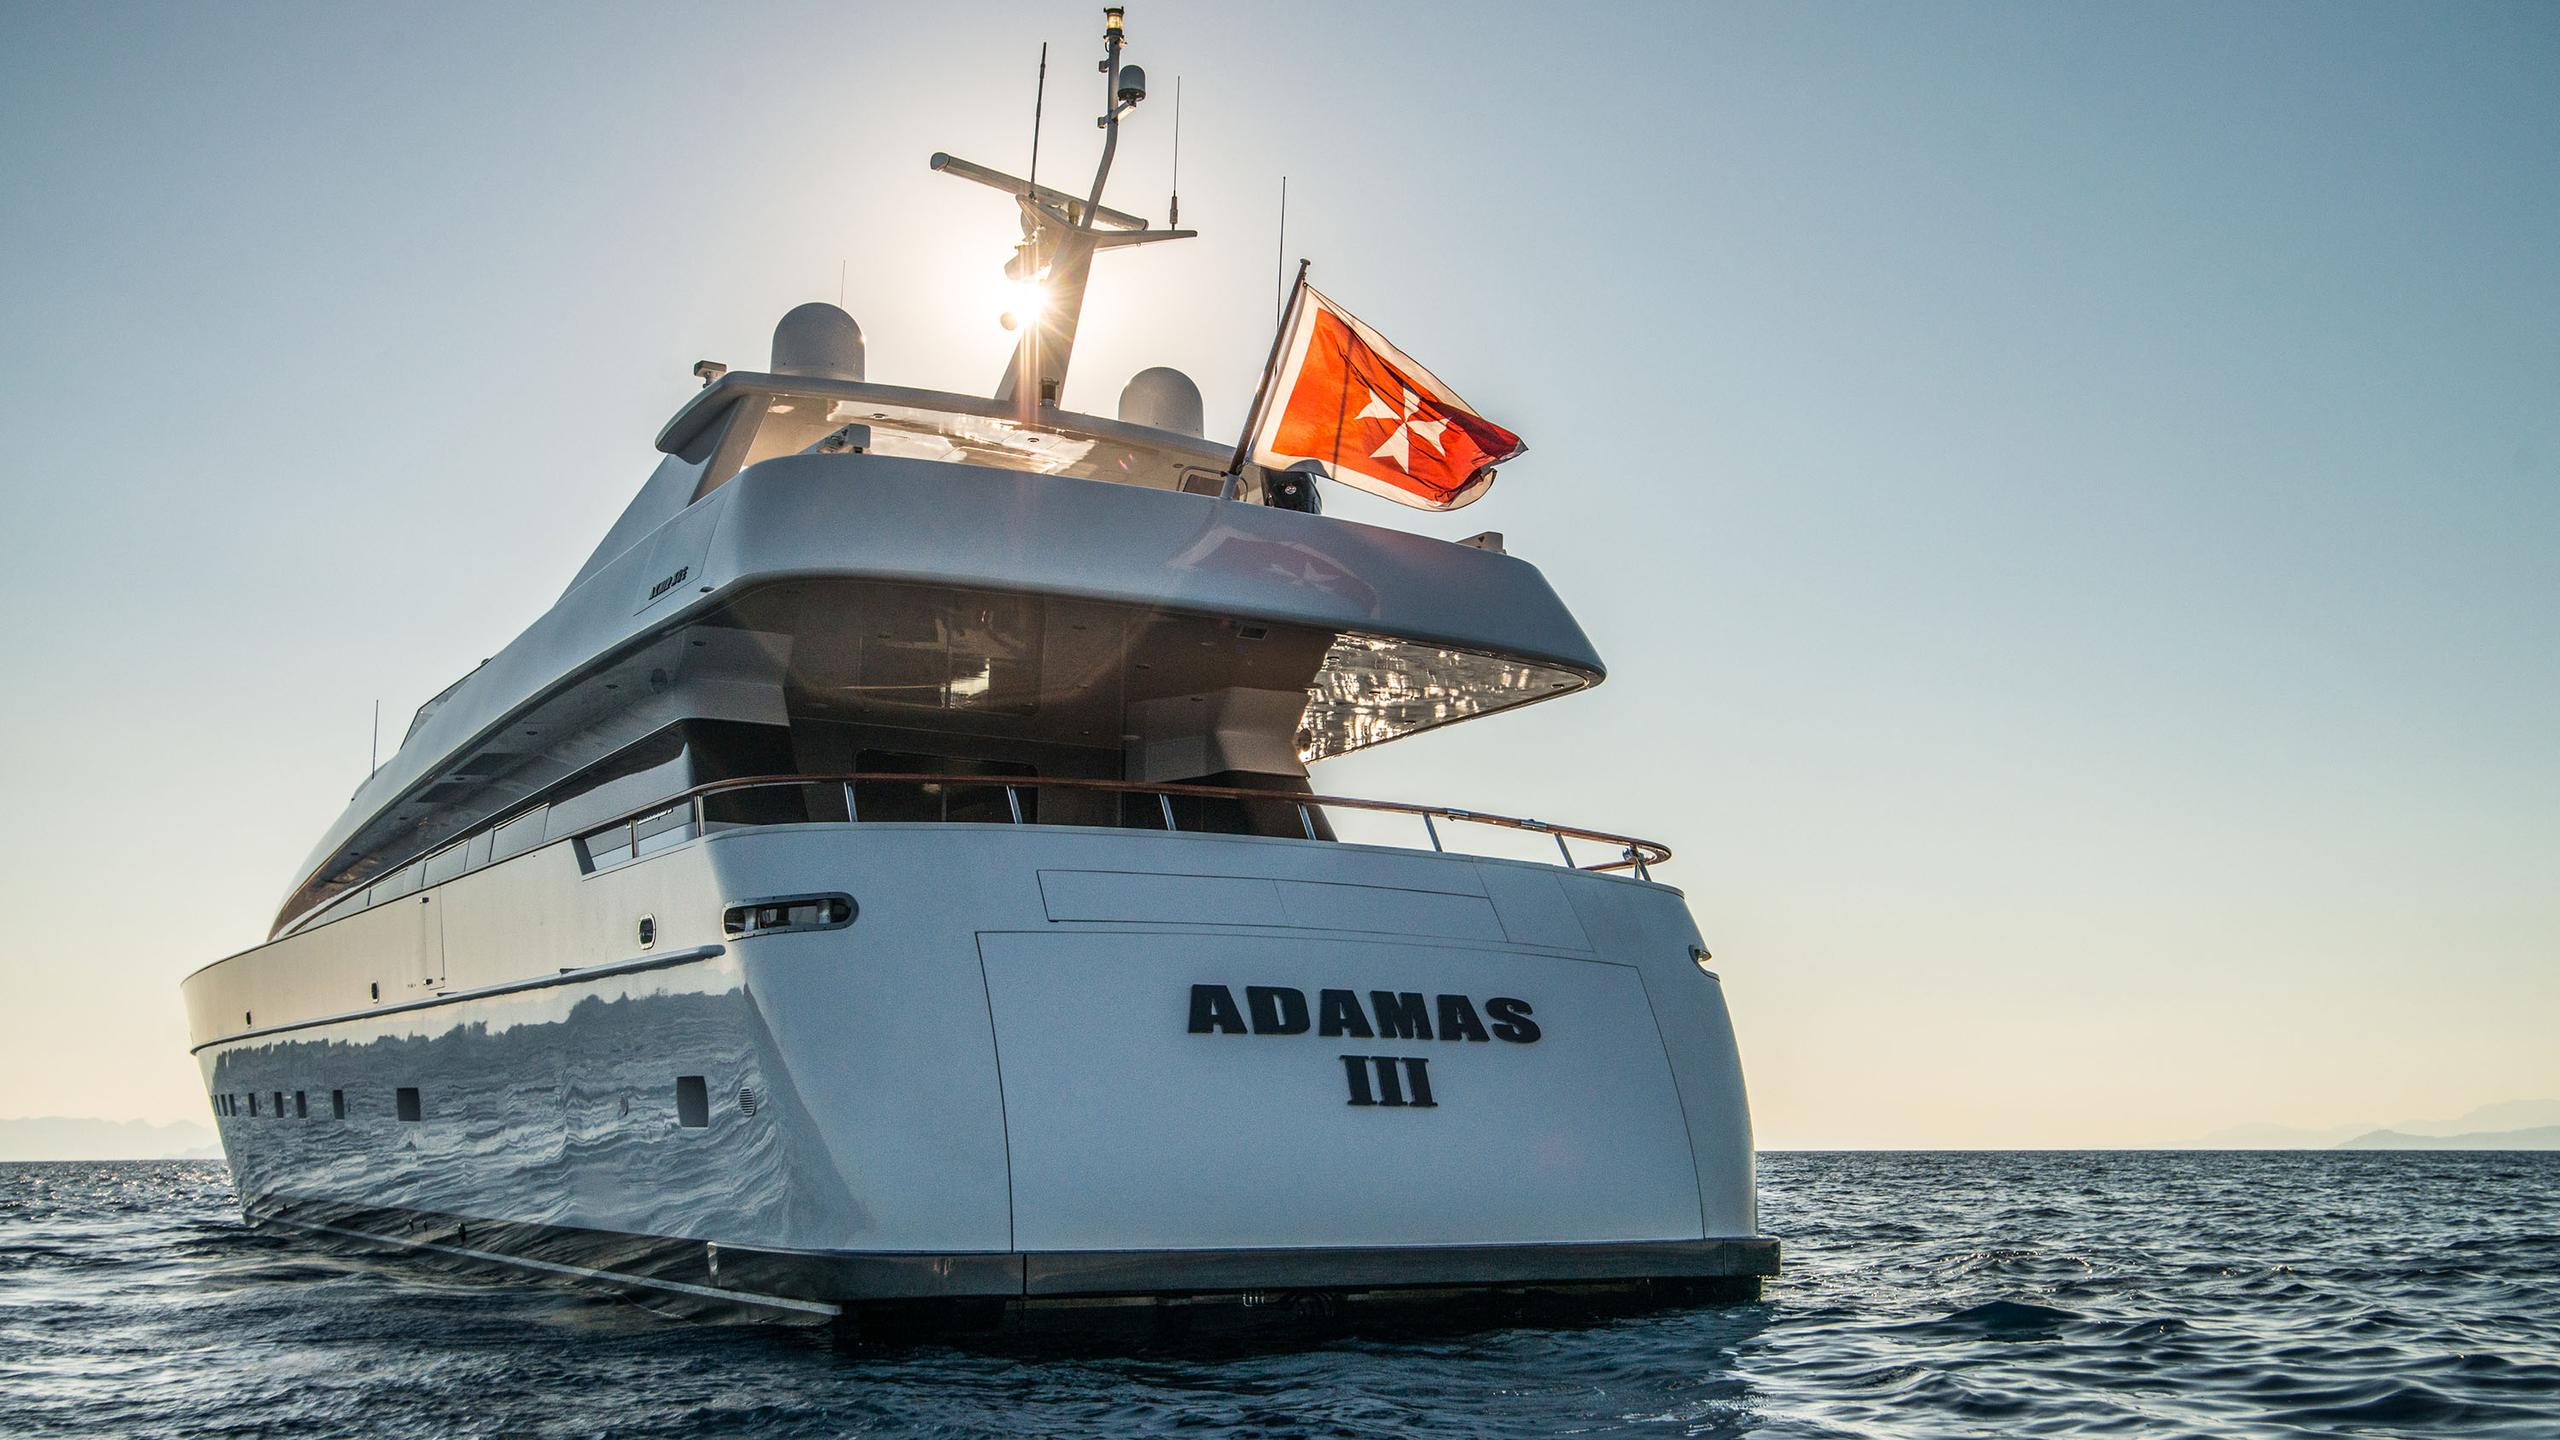 Adamas III yacht – Cantieri di Pisa – 1996 – owner Allesandro Falcai